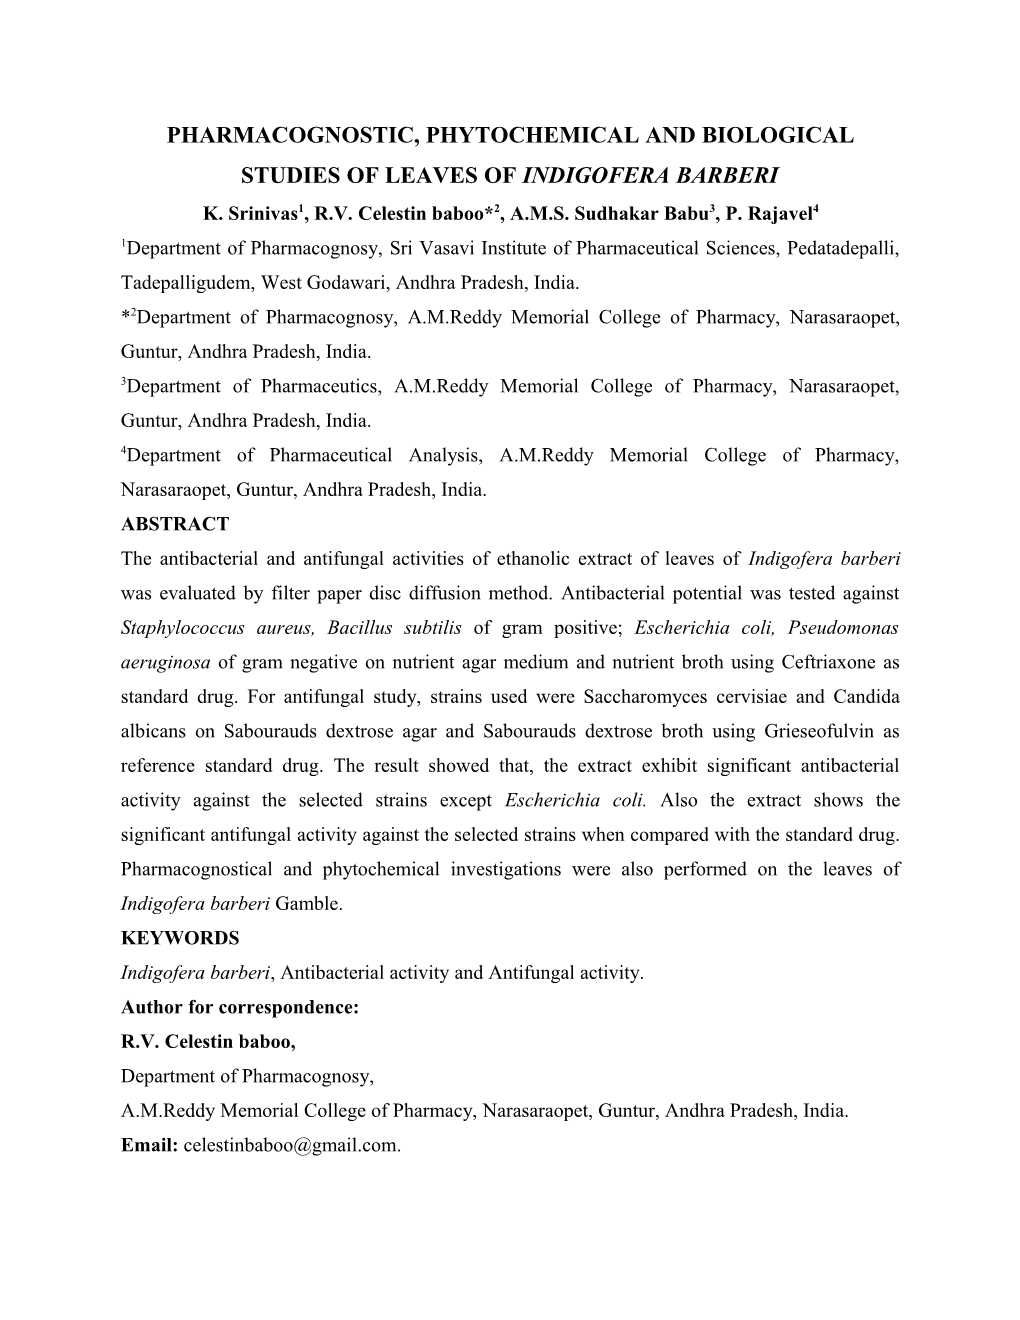 Pharmacognostic, Phytochemical and Biological Studies of Leaves of Indigofera Barberi